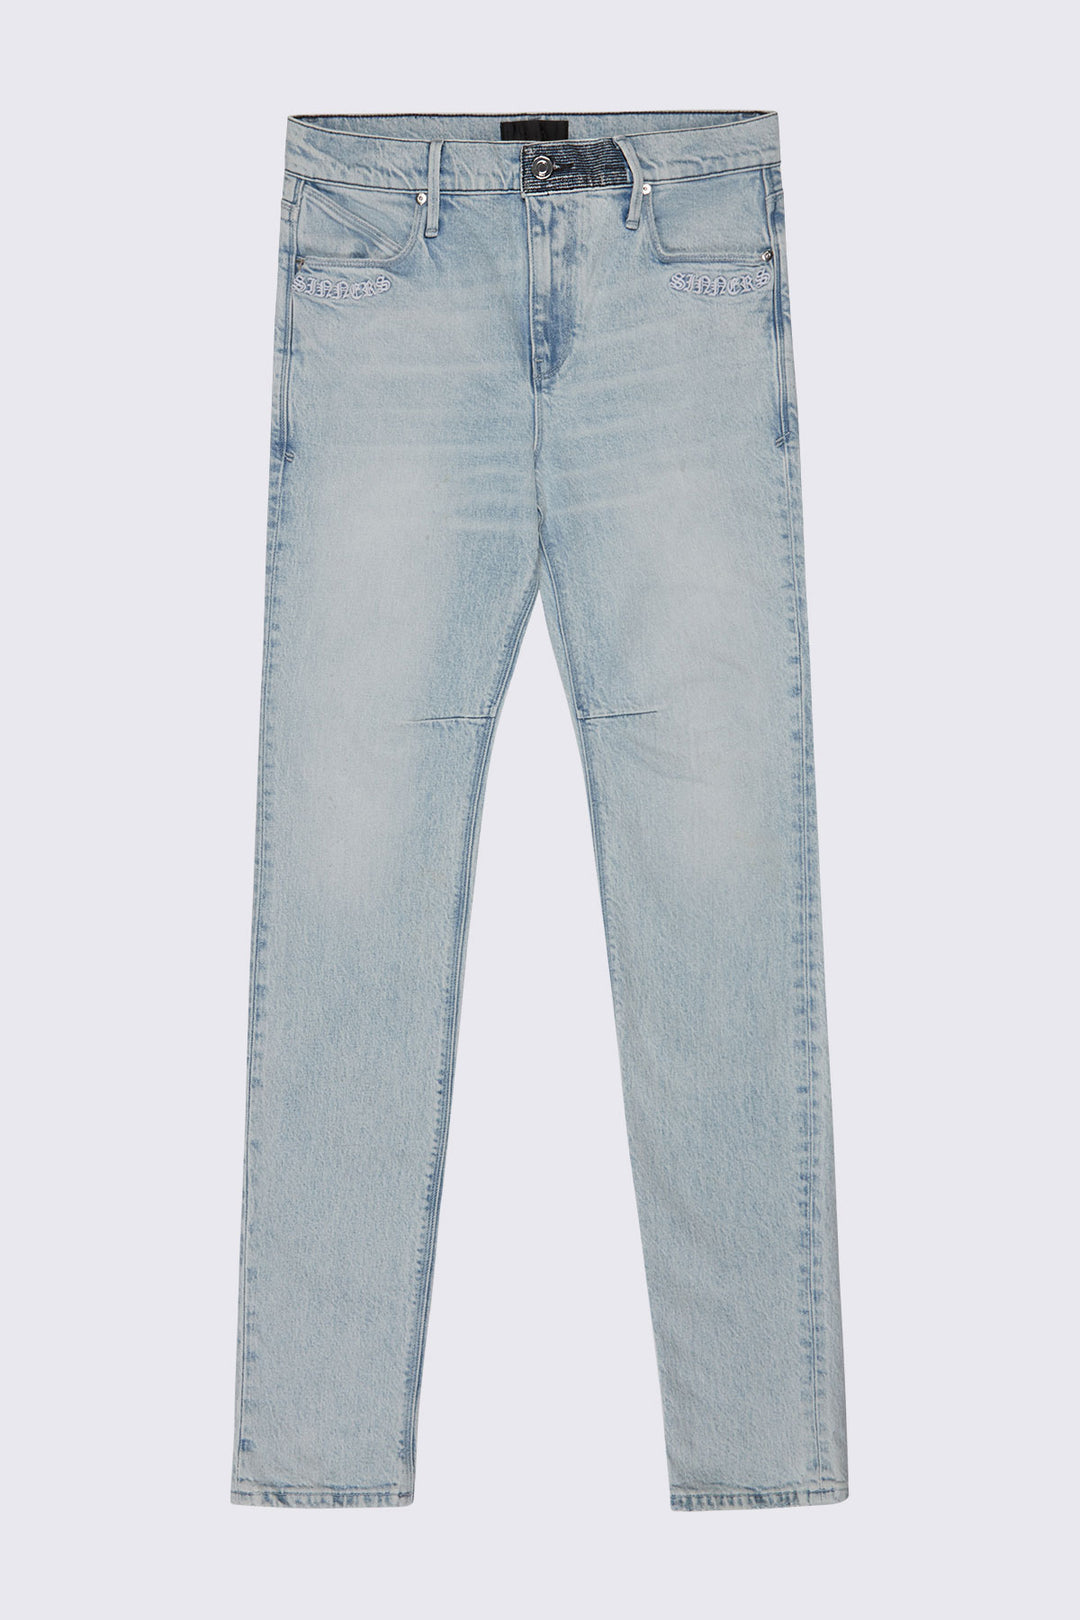 Jeans | Men & Women's Jeans | RtA Brand – tagged 